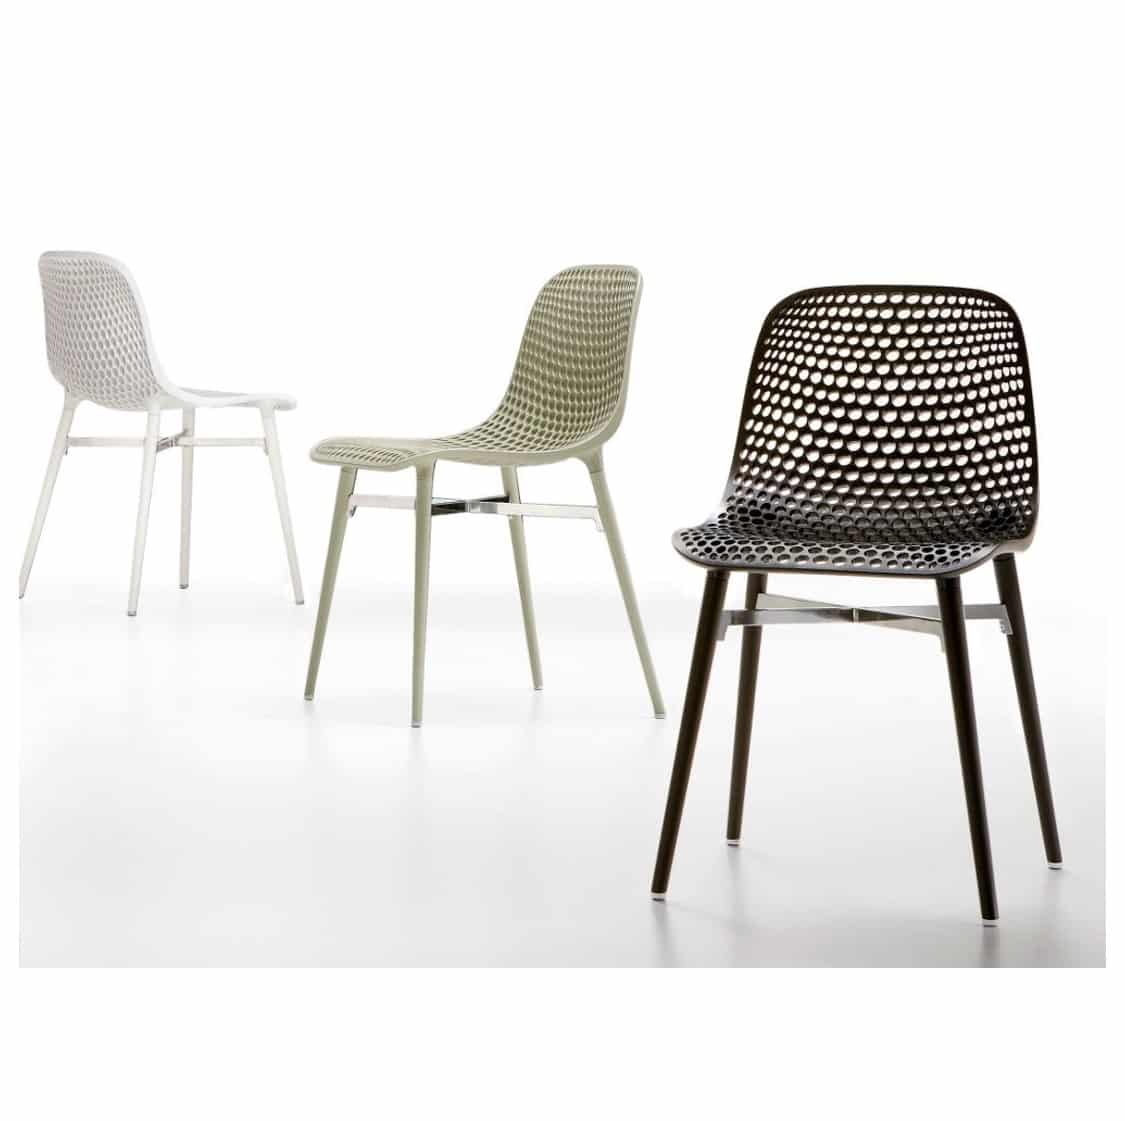 Next the chair. Современные стулья для кухни икеа. Ikea Persby стул. Стул Инфинити. Пластиковые стулья для кухни.